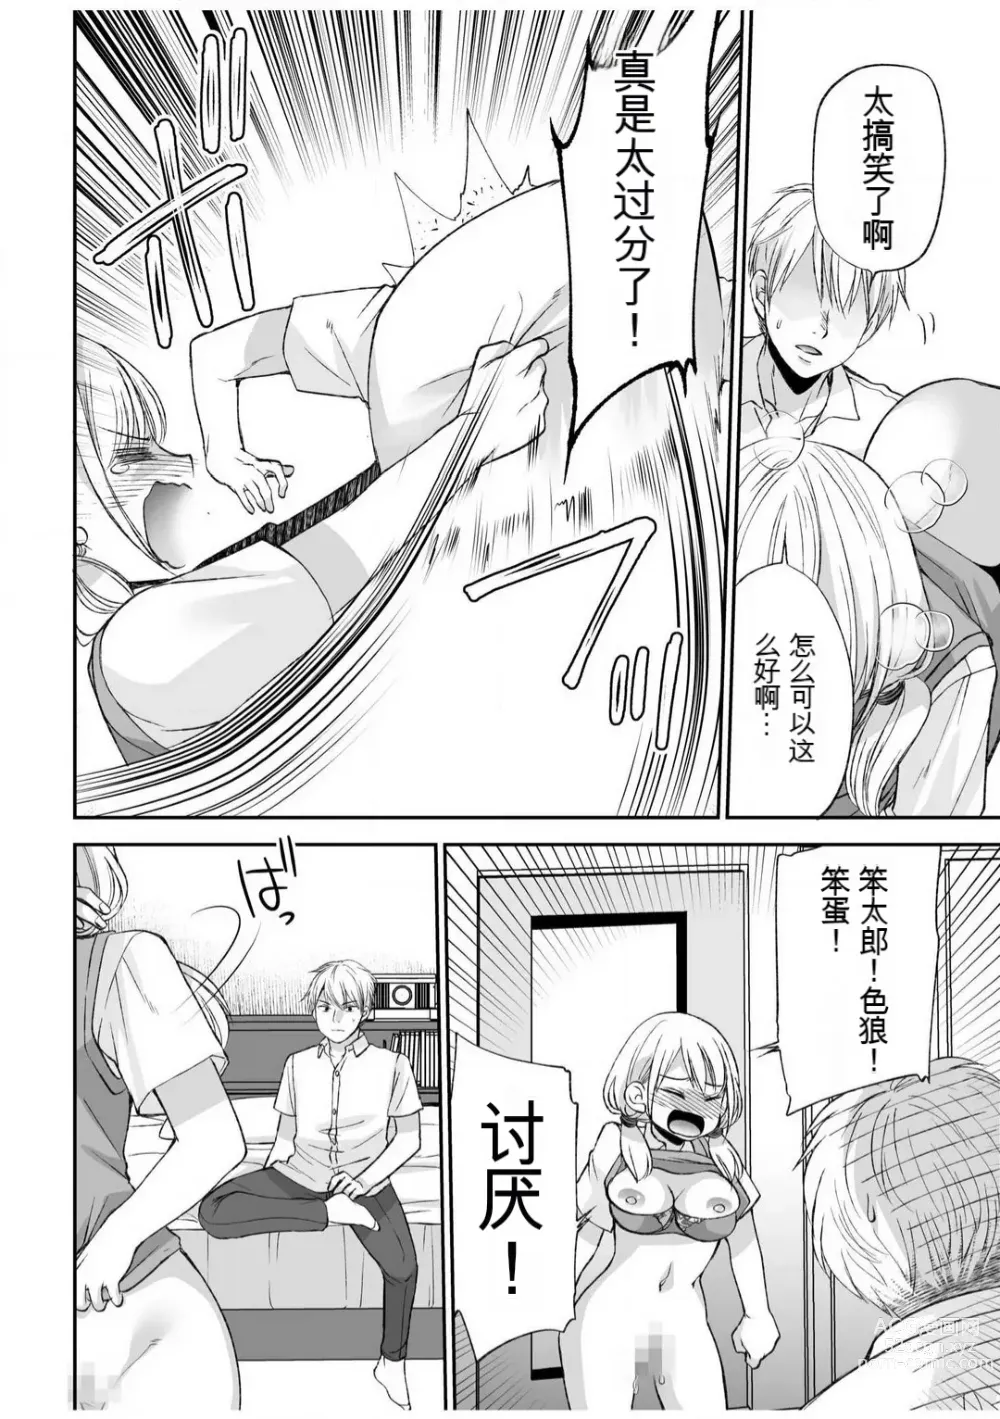 Page 23 of manga 「不要...不要进来太多...」〜冷酷攻略系的青梅竹马和义兄妹〜SEX〜【18禁】 1-10【GPT翻译】